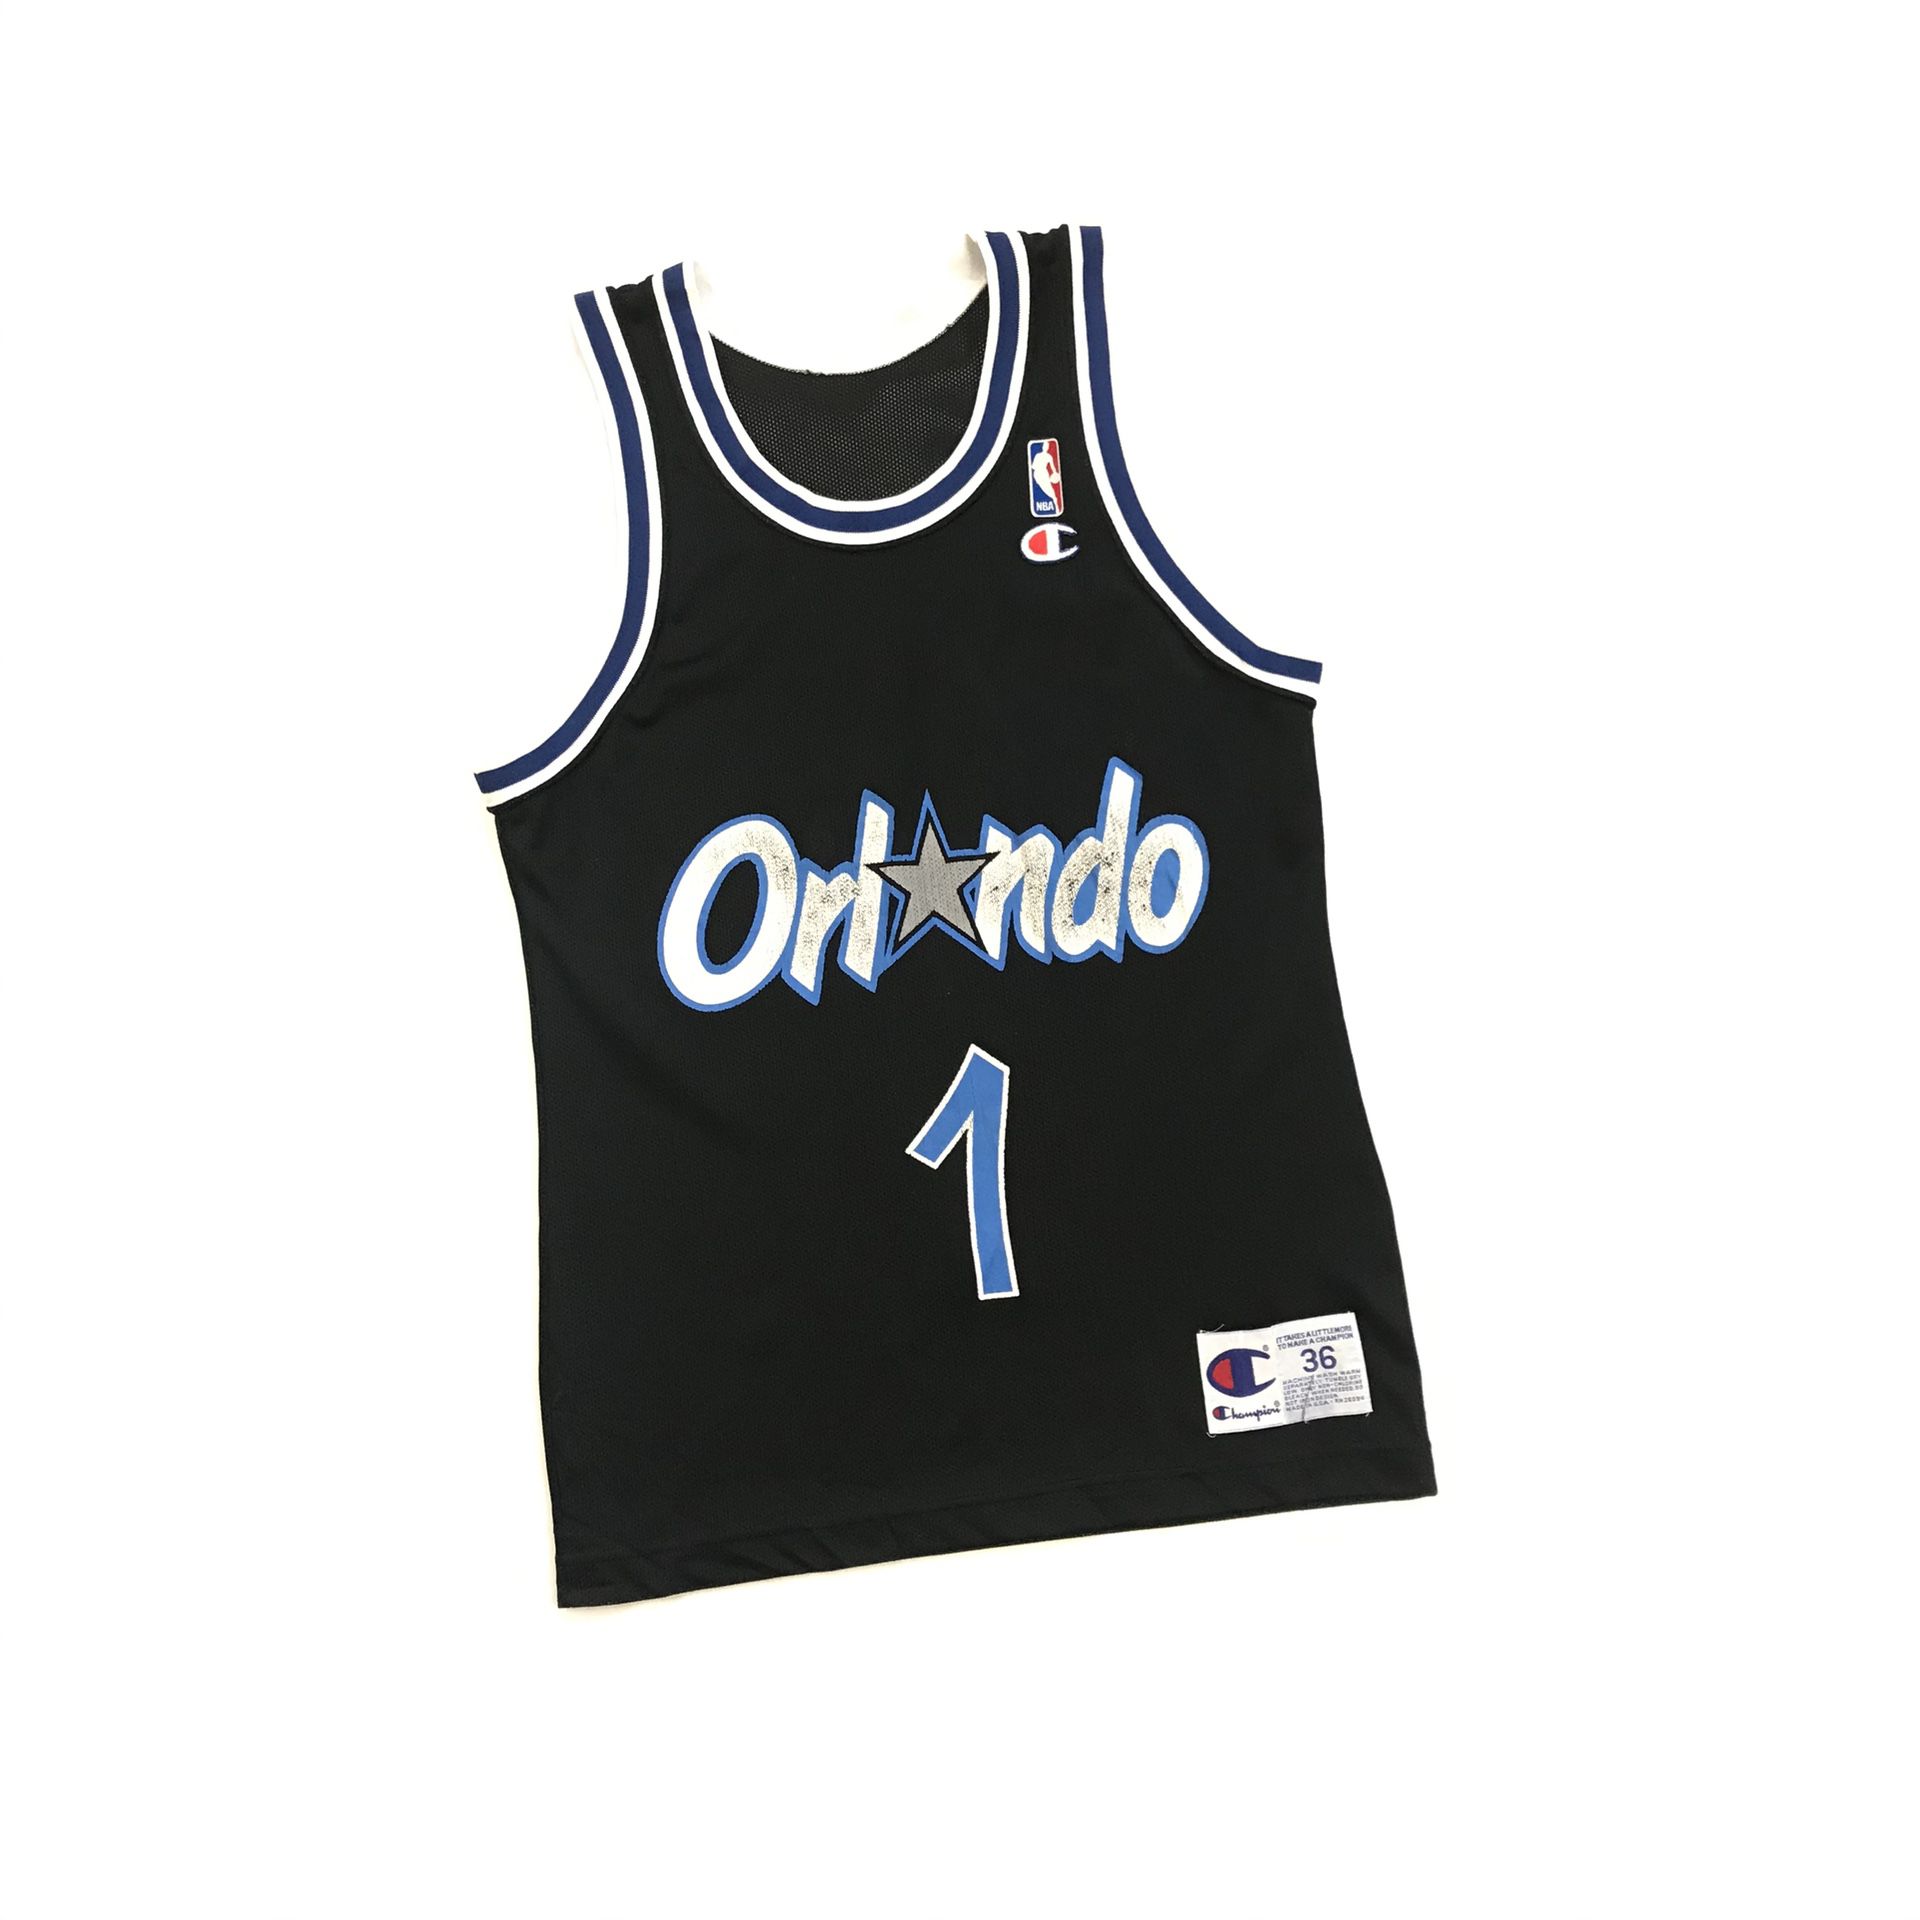 Vintage Orlando Magic Hardaway Jersey